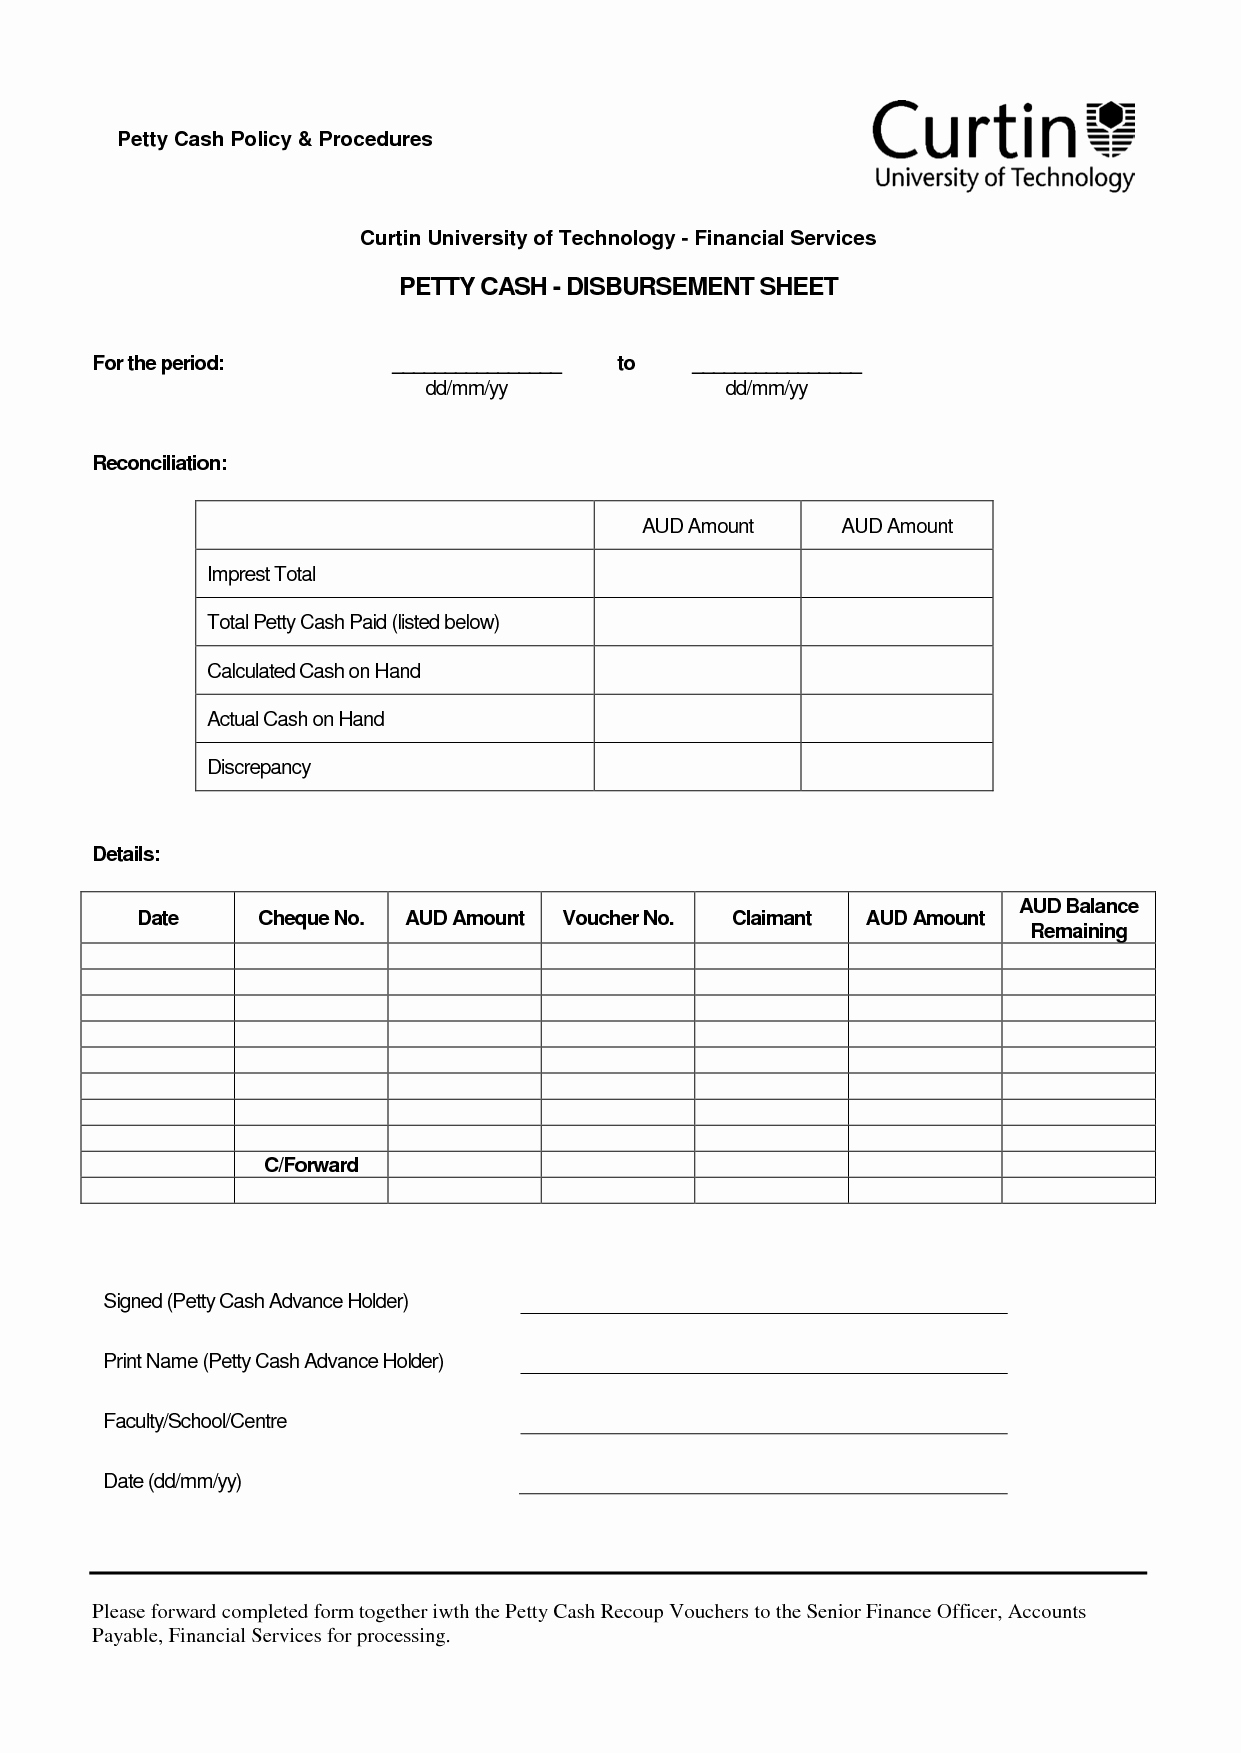 Petty Cash Balance Sheet Template Awesome Best S Of Petty Cash Disbursement form Petty Cash